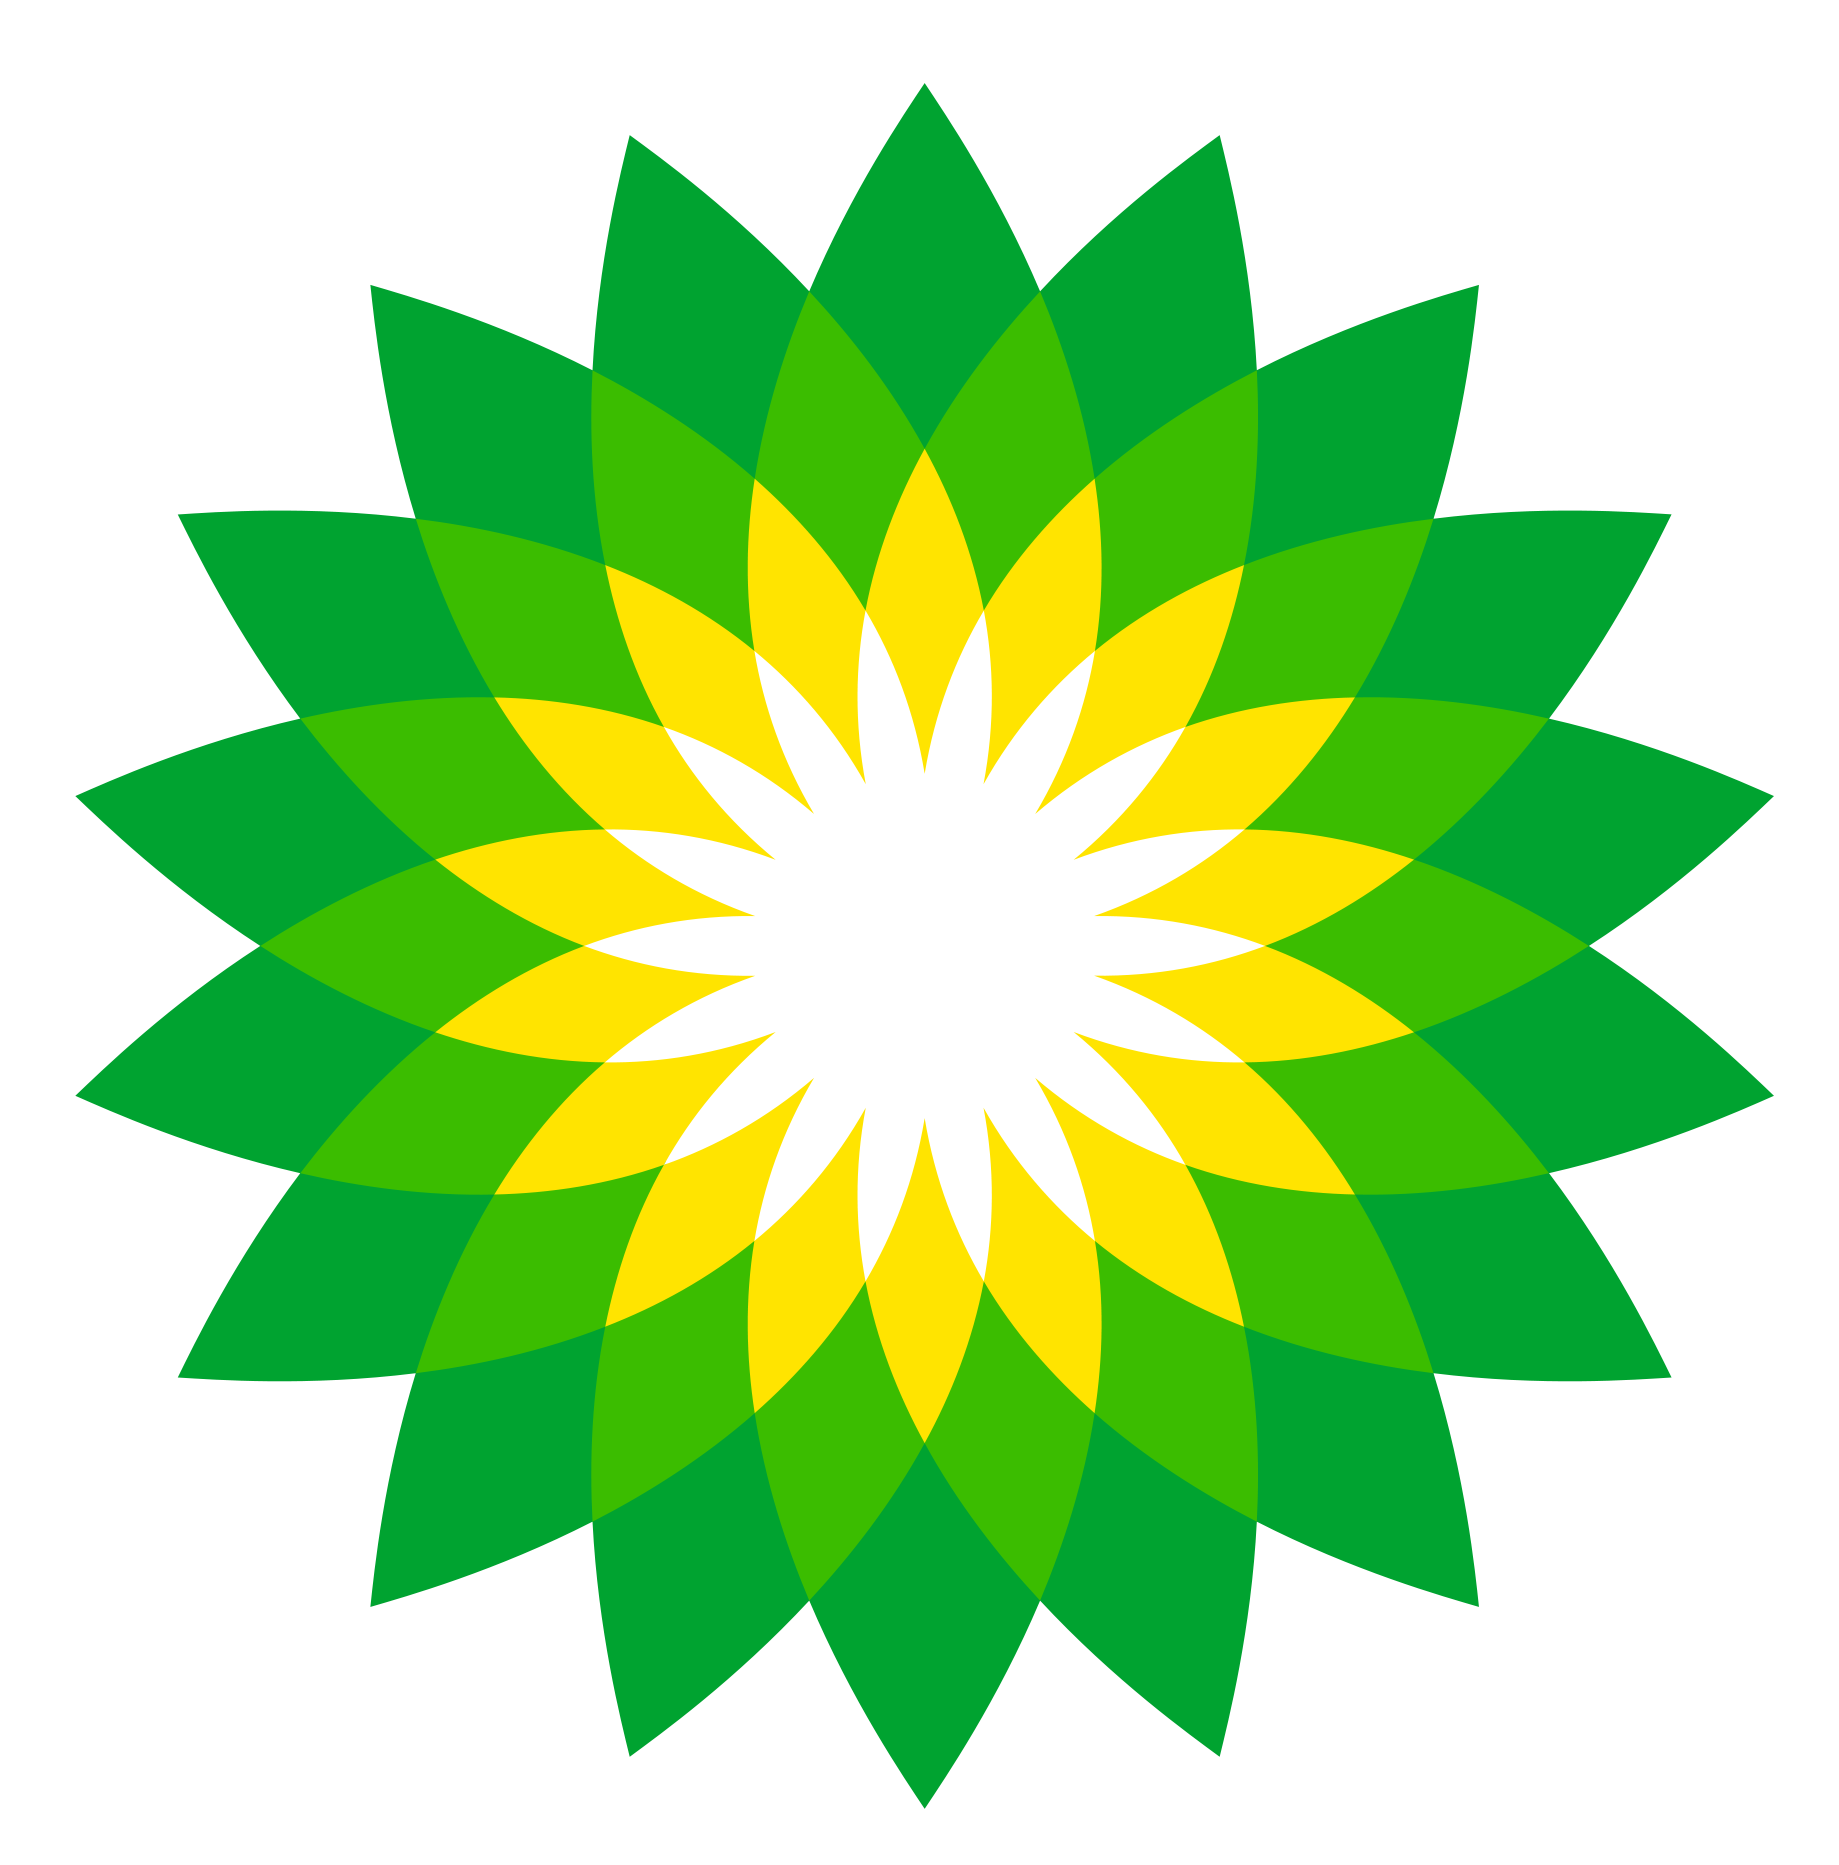 The British Petroleum (BP) company logo